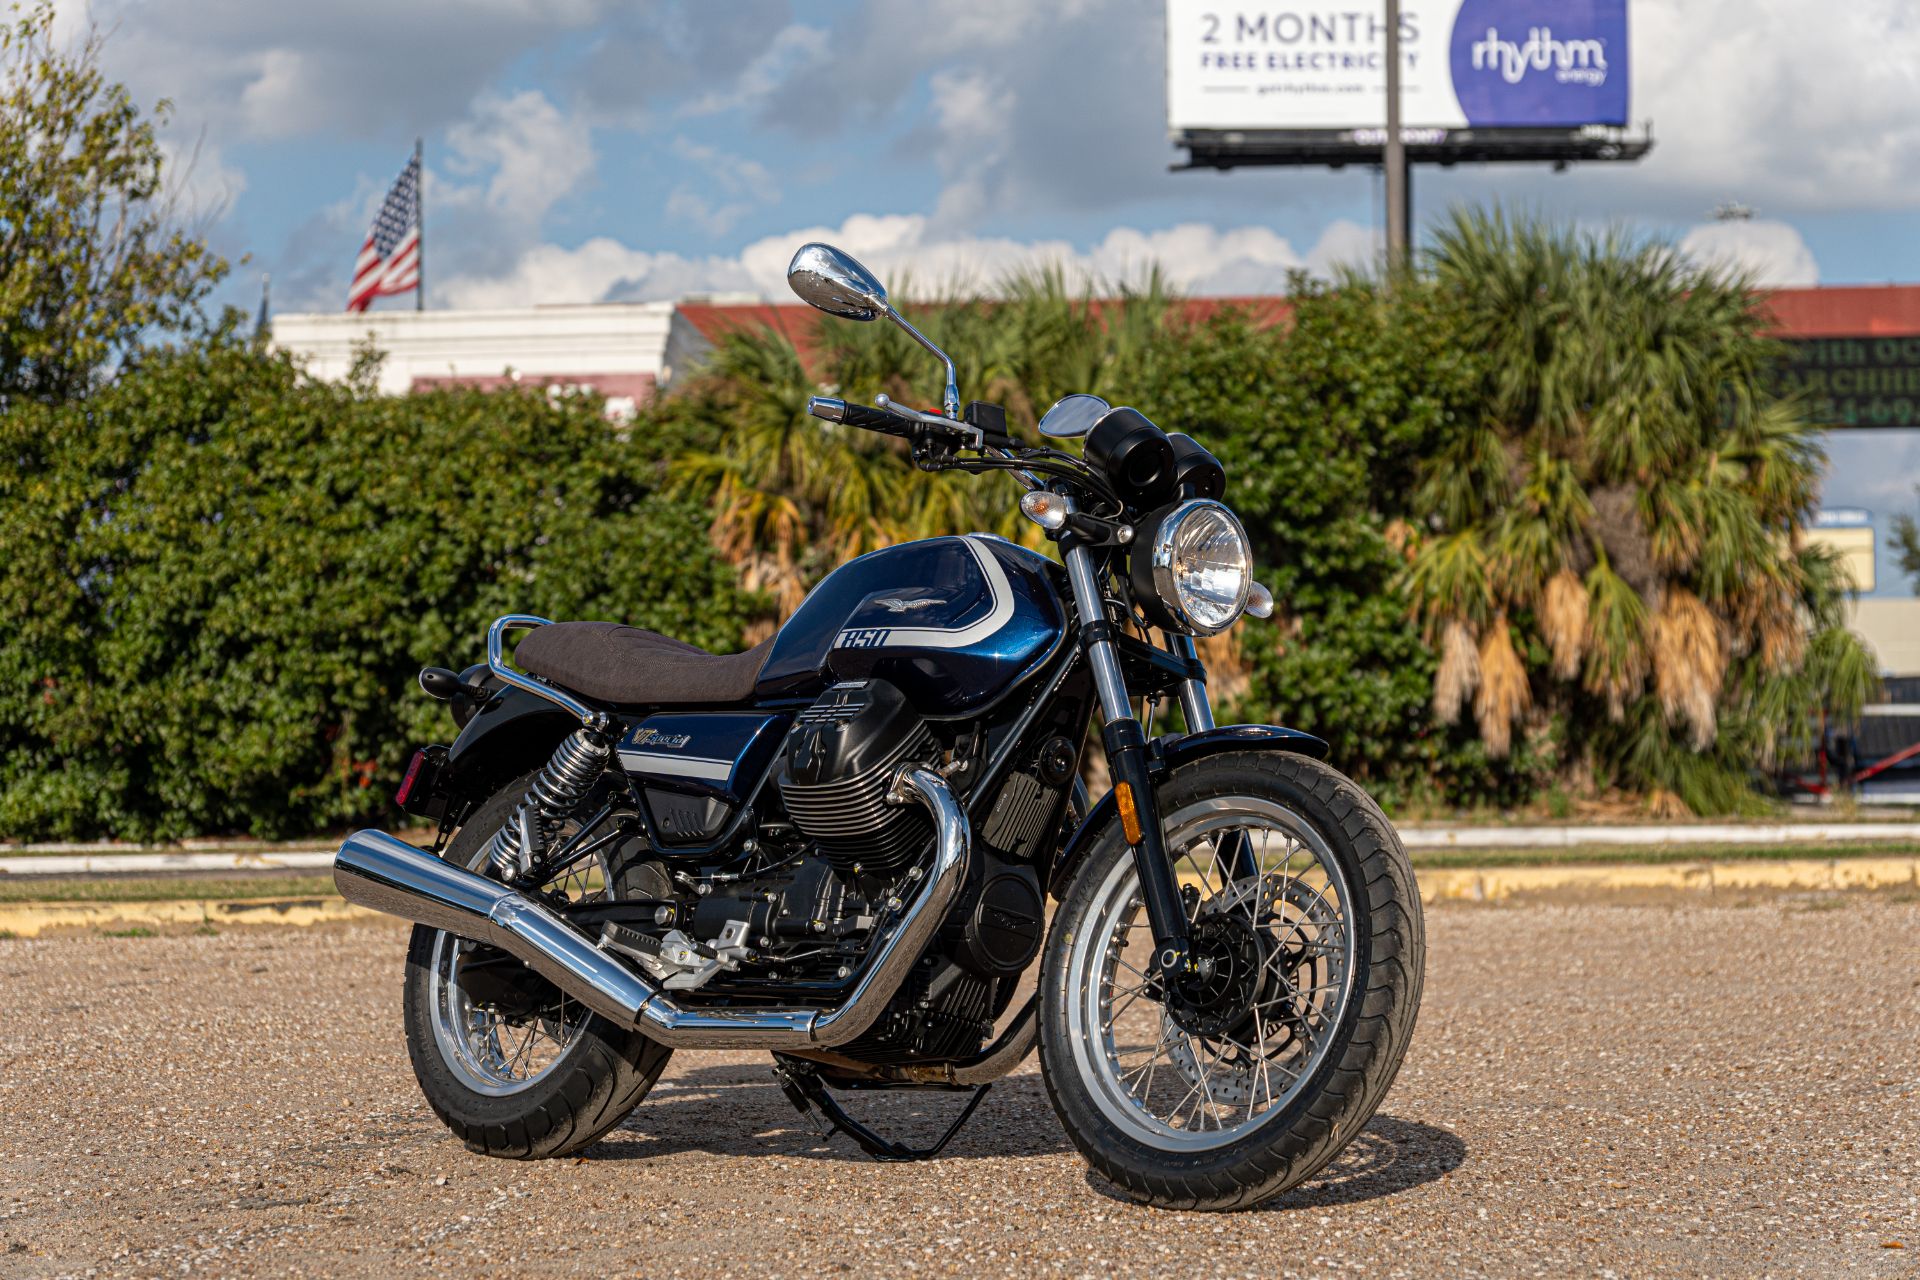 2022 Moto Guzzi V7 Special in Houston, Texas - Photo 1